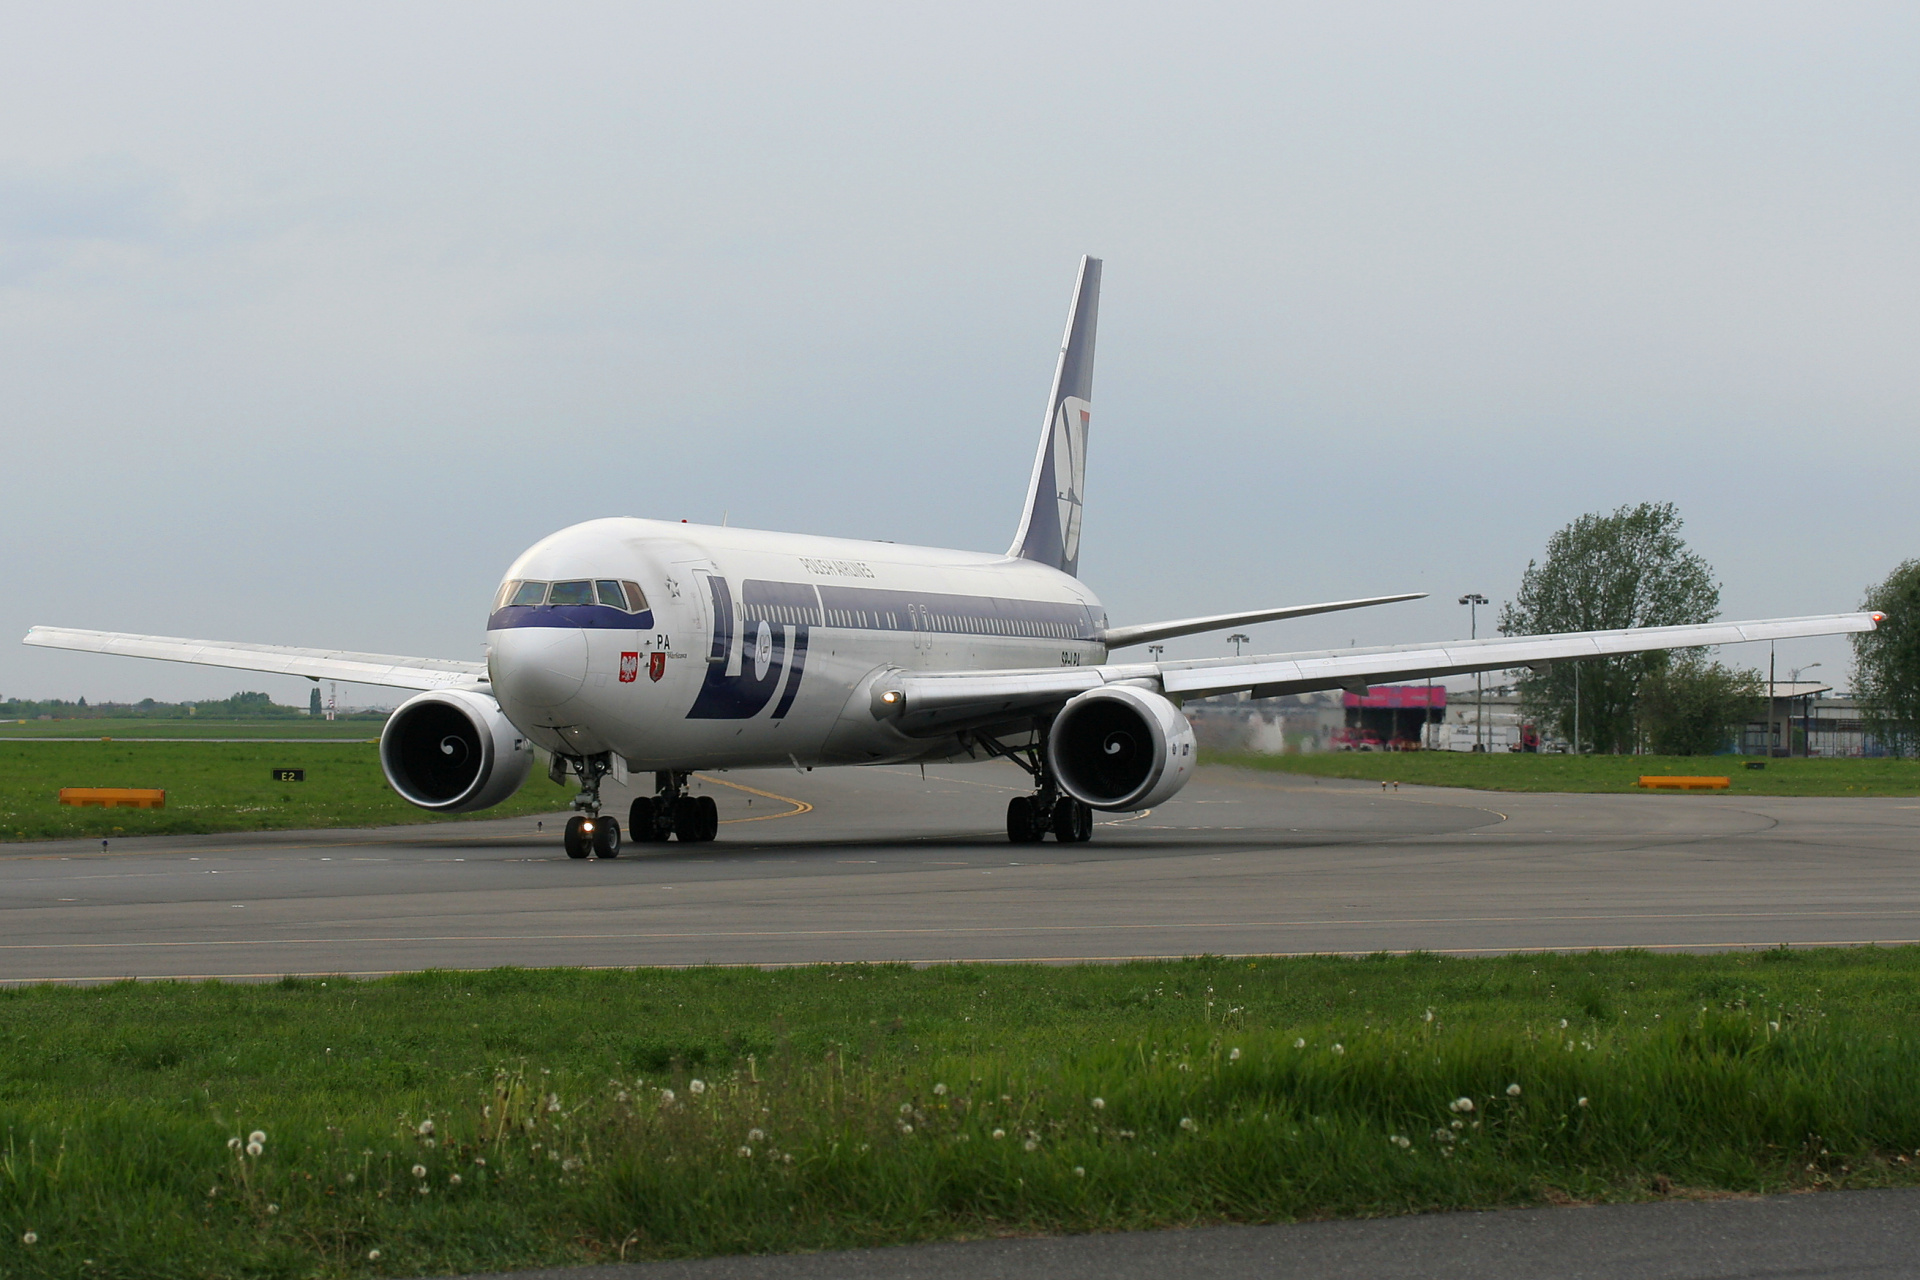 SP-LPA (80th Anniversary sticker) (Aircraft » EPWA Spotting » Boeing 767-300 » LOT Polish Airlines)